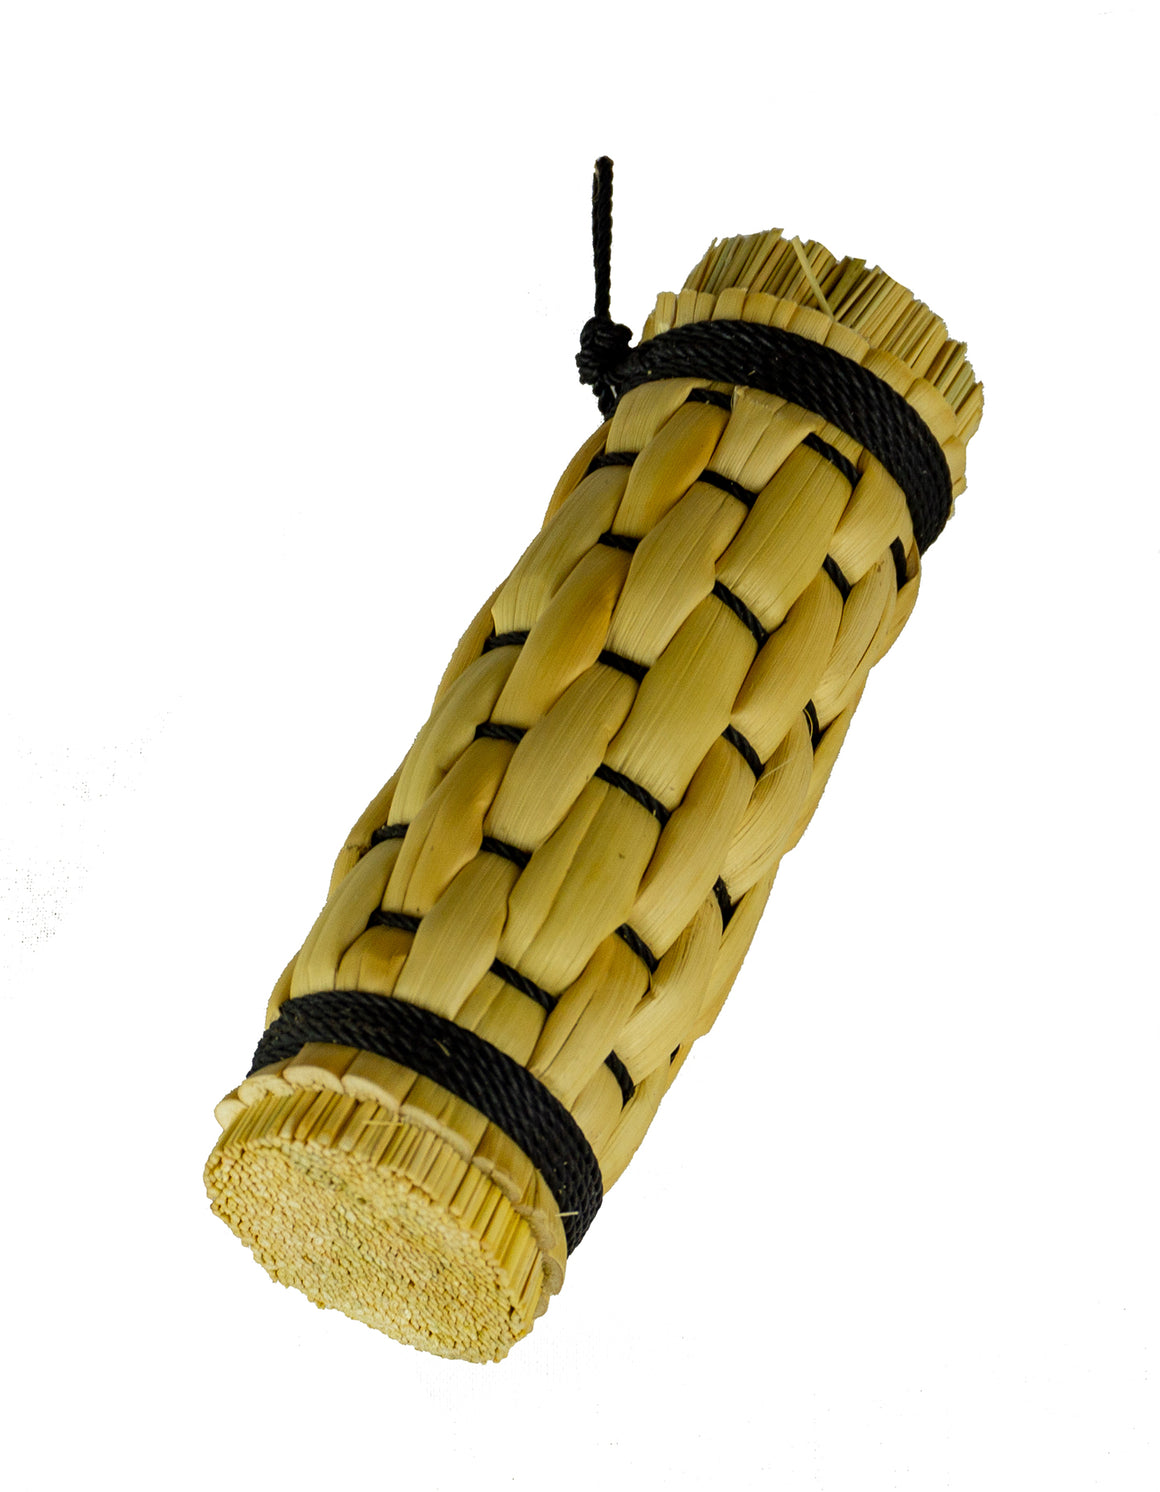 Granville Island Broom Co Straw Burnisher or Polissoir woodworking tool